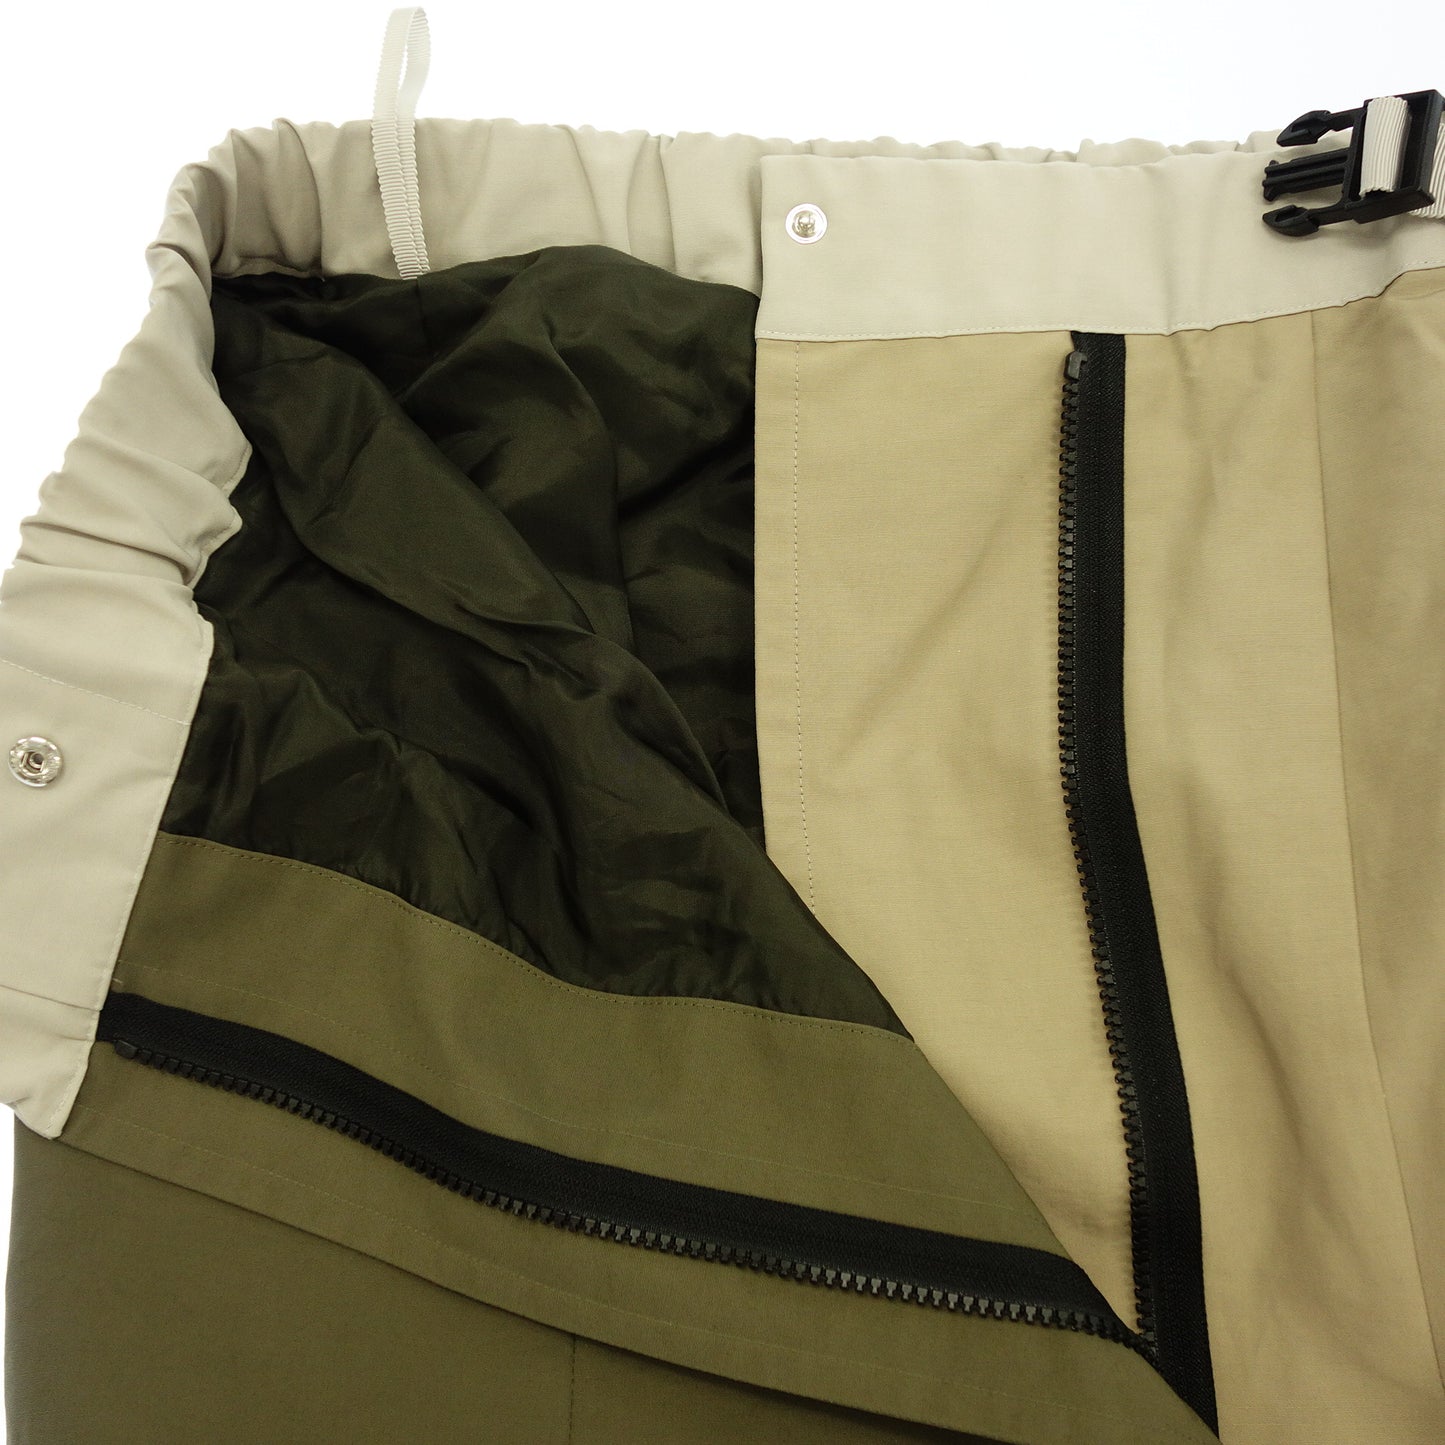 Good Condition◆Sacai Pleated Skirt Bicolor Belt 22-06393 Khaki Beige Size 3 Women's Sacai [AFB32] 